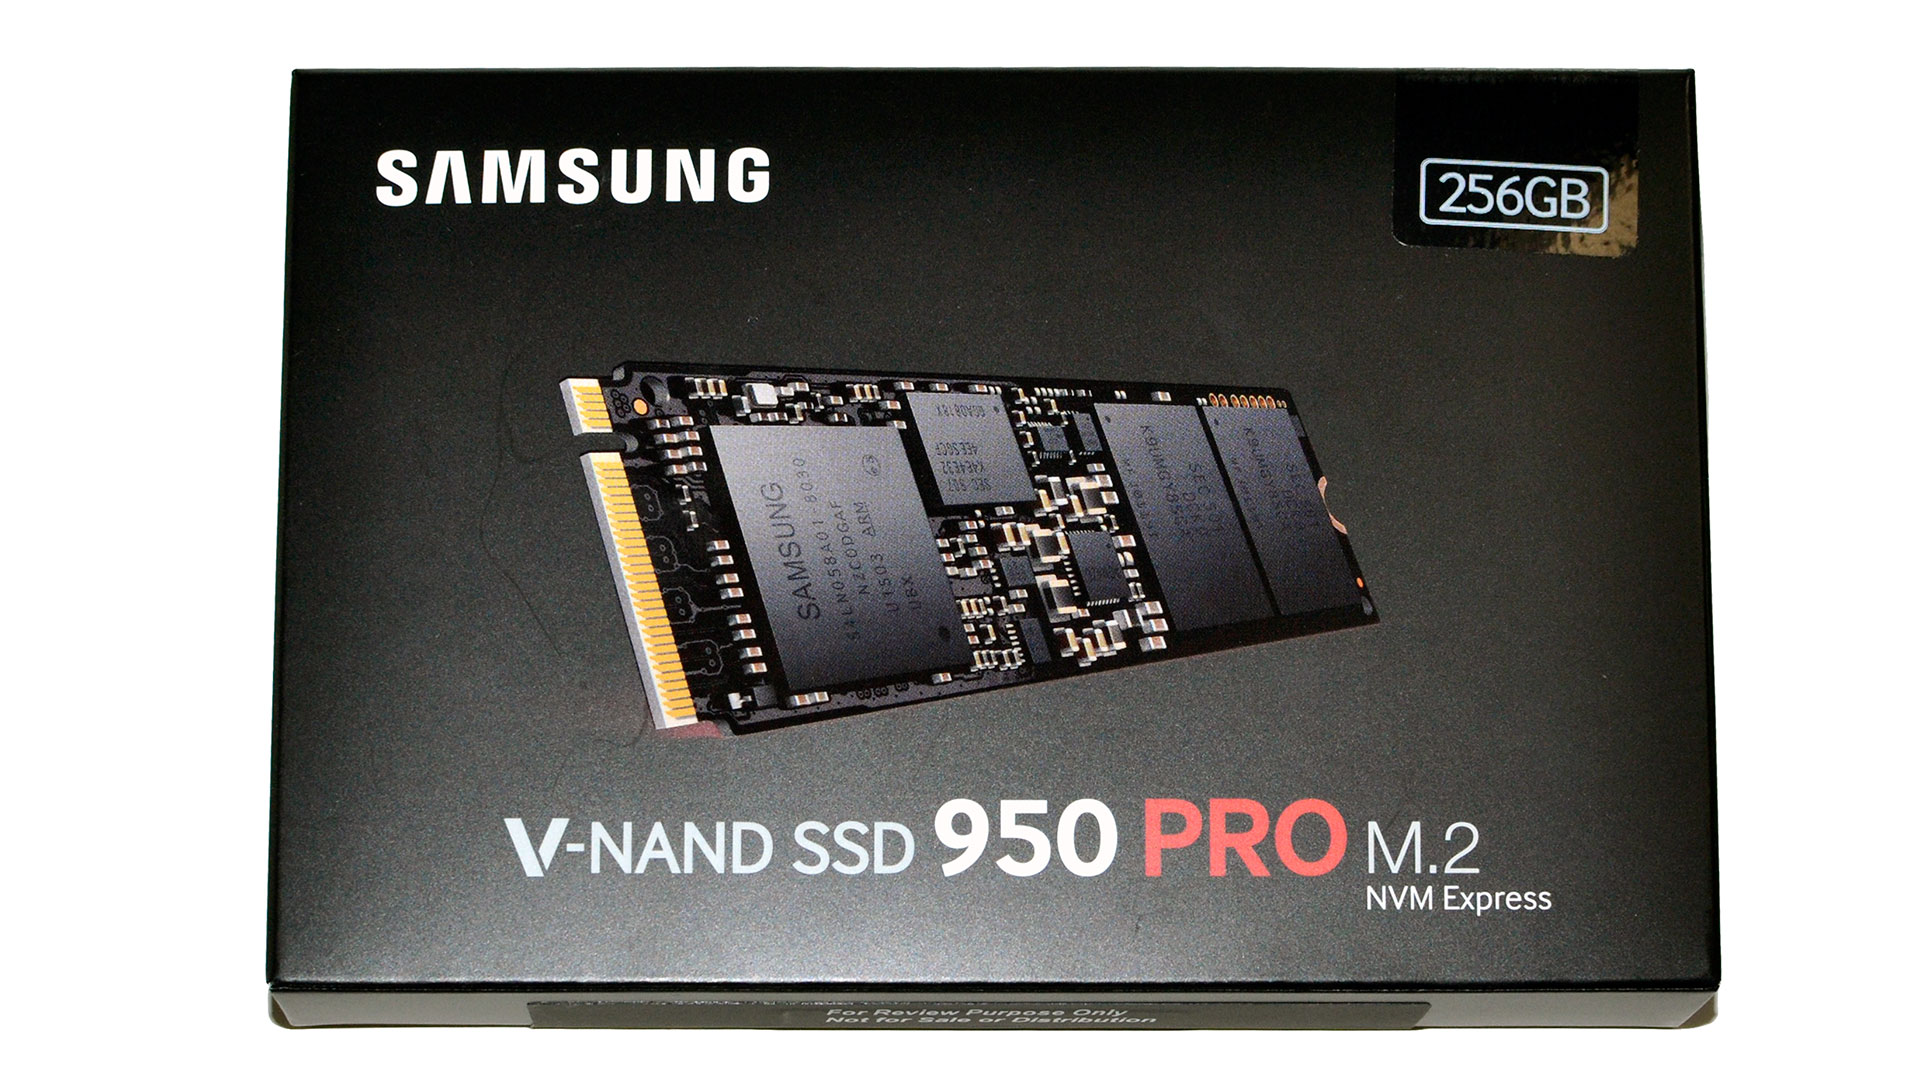 950 Pro M2 Samsung